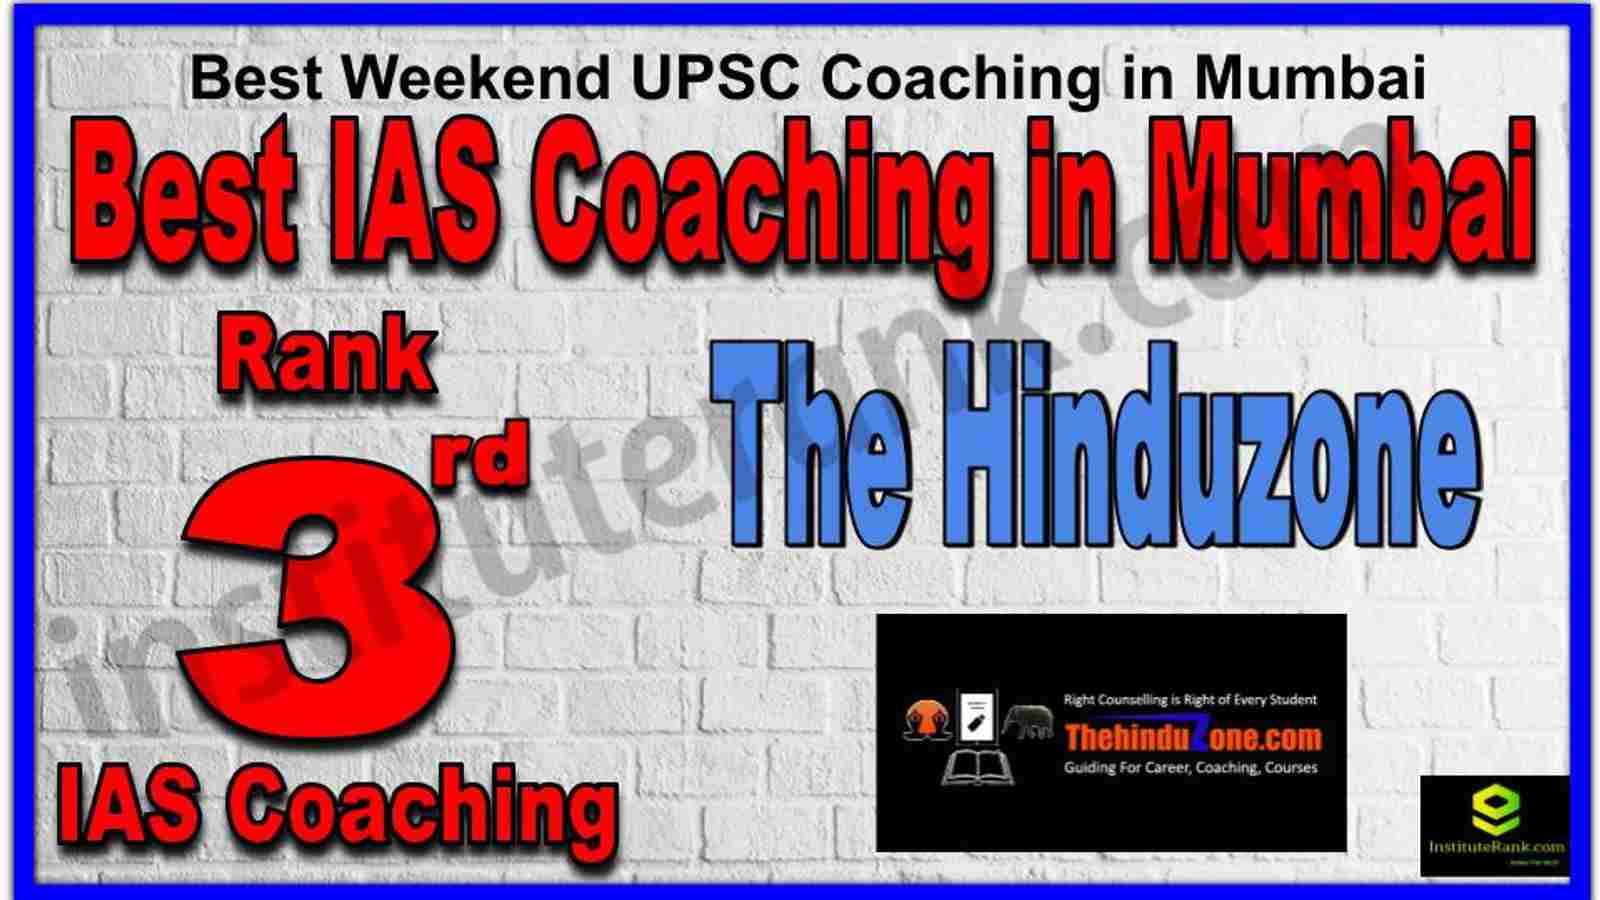 Rank 3rd Best IAS Coaching in Mumbai-2